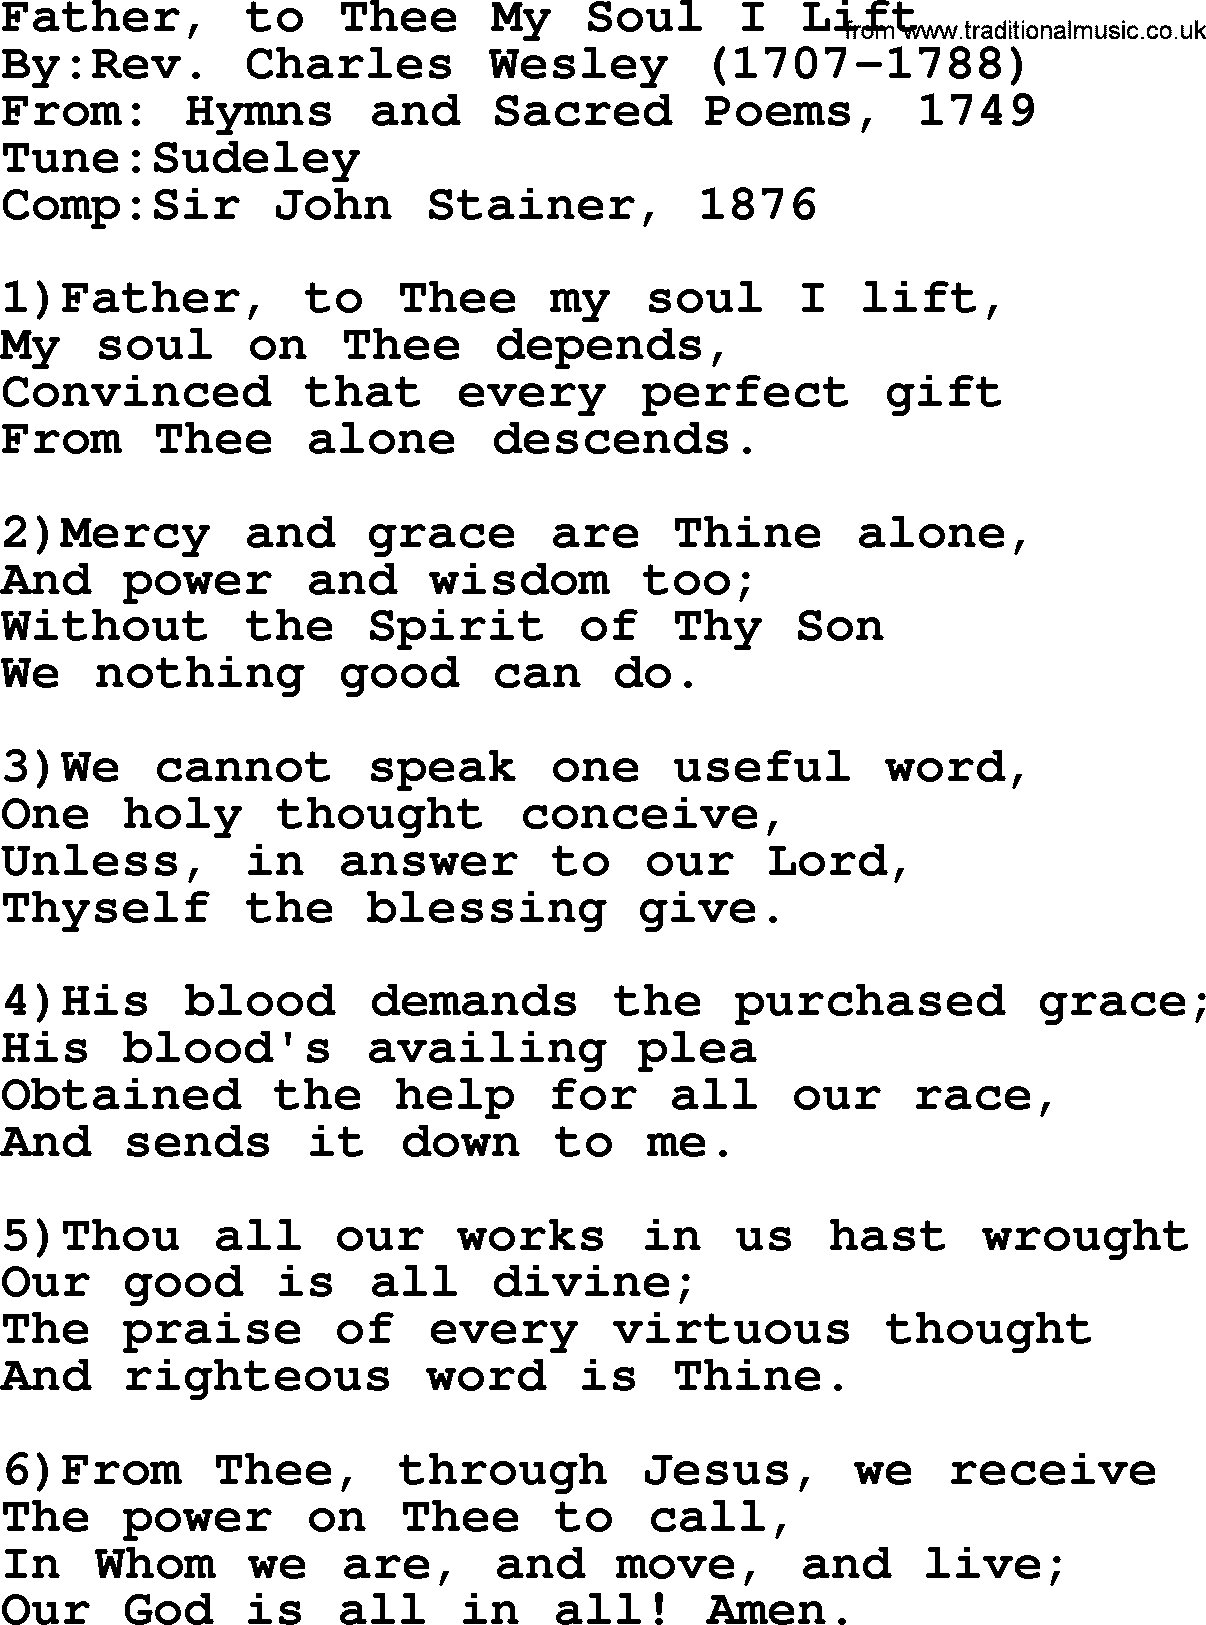 Methodist Hymn: Father, To Thee My Soul I Lift, lyrics